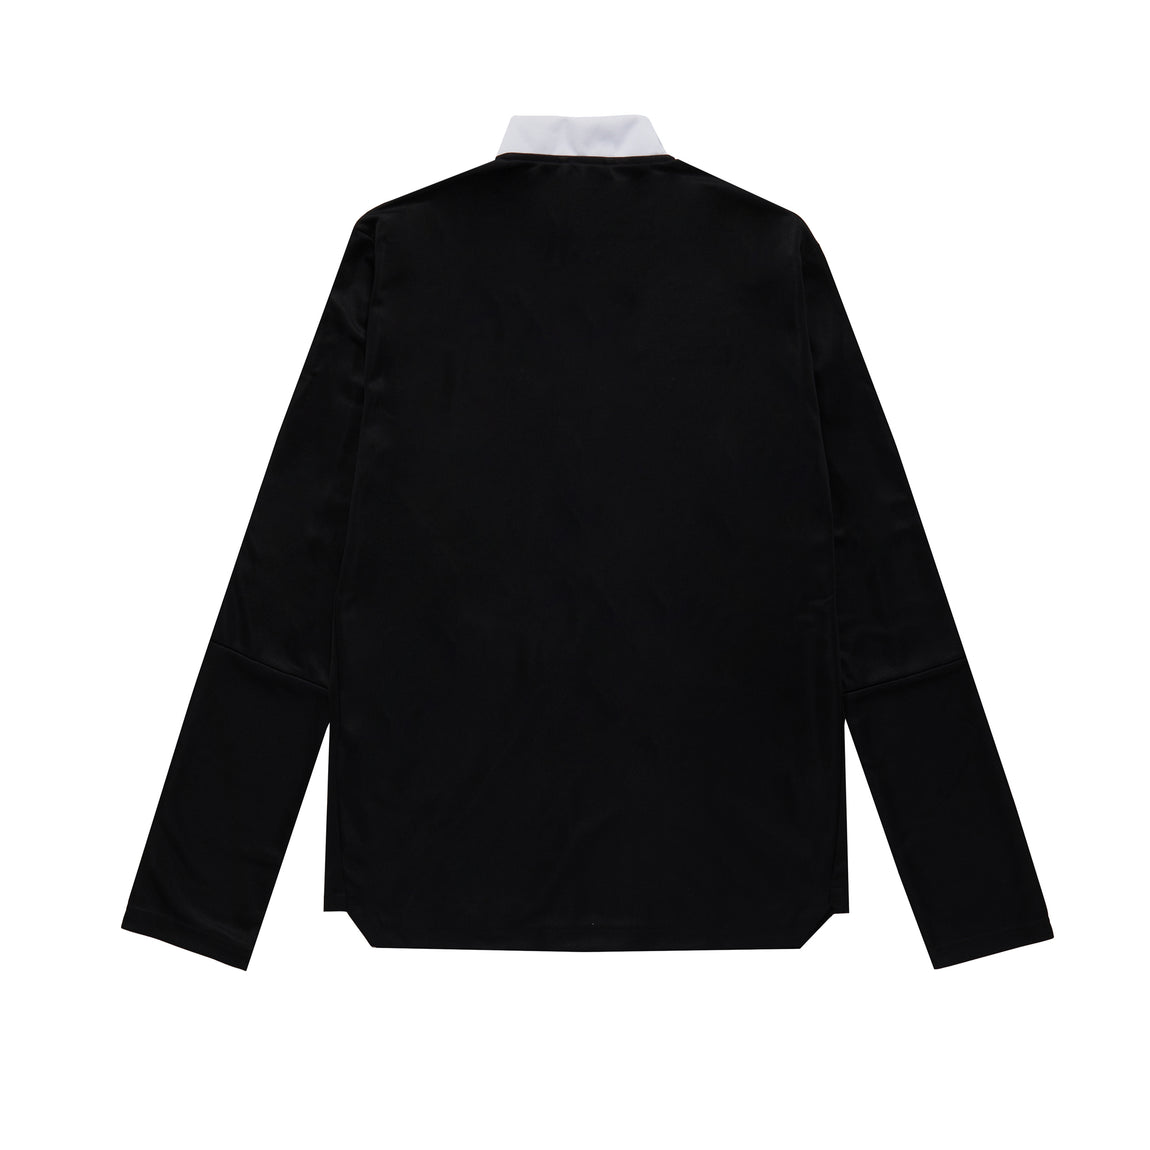 Adidas x 424 MLS Tiro21 Track Jacket (Black) - Adidas x 424 MLS Tiro21 Track Jacket (Black) - 